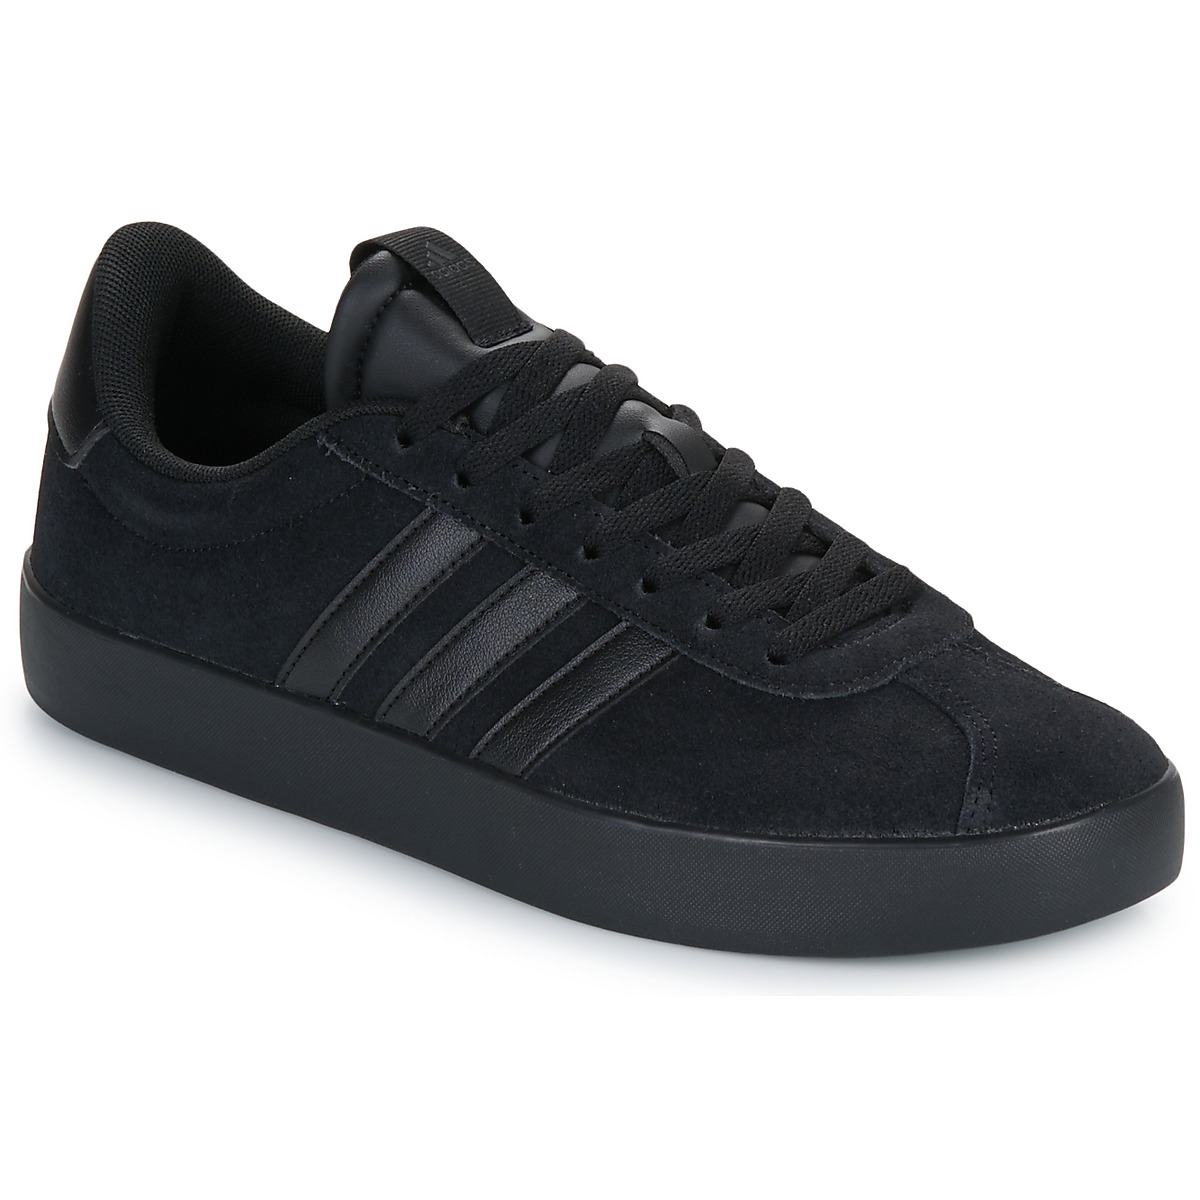 Adidas Vl Court 3.0 Black